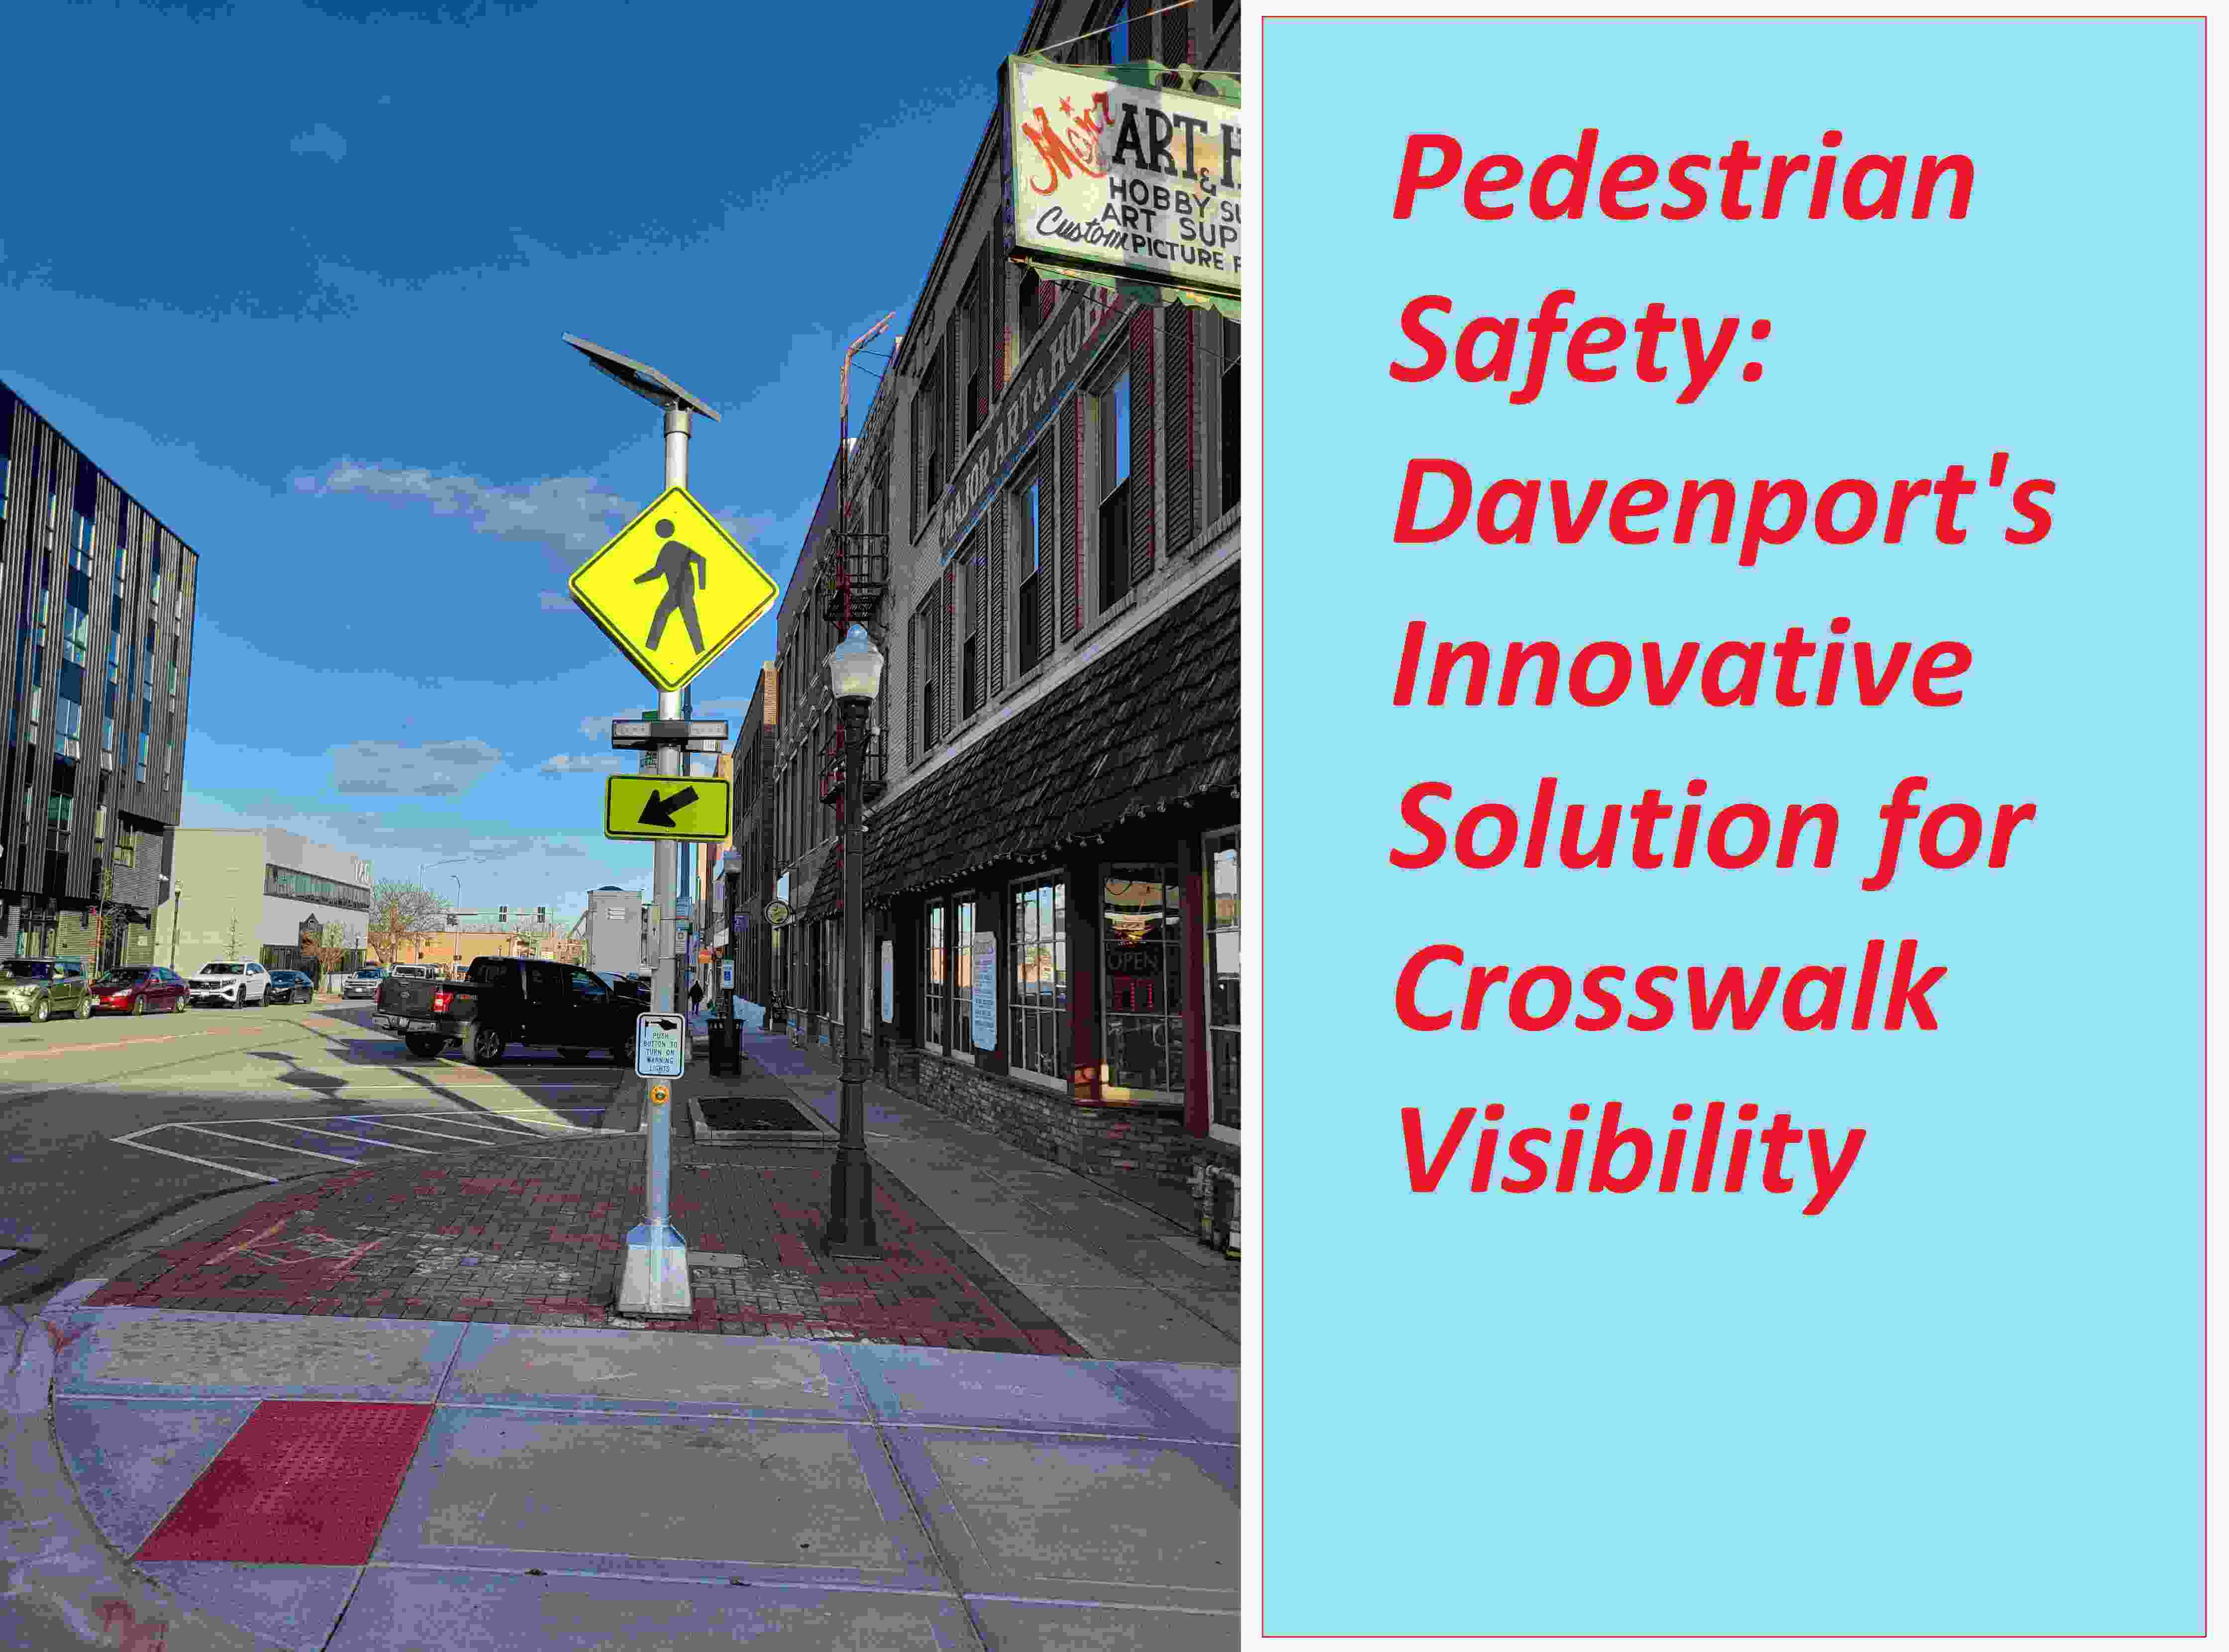 Pedestrian Safety: Davenport's Innovative Solution for Crosswalk Visibility